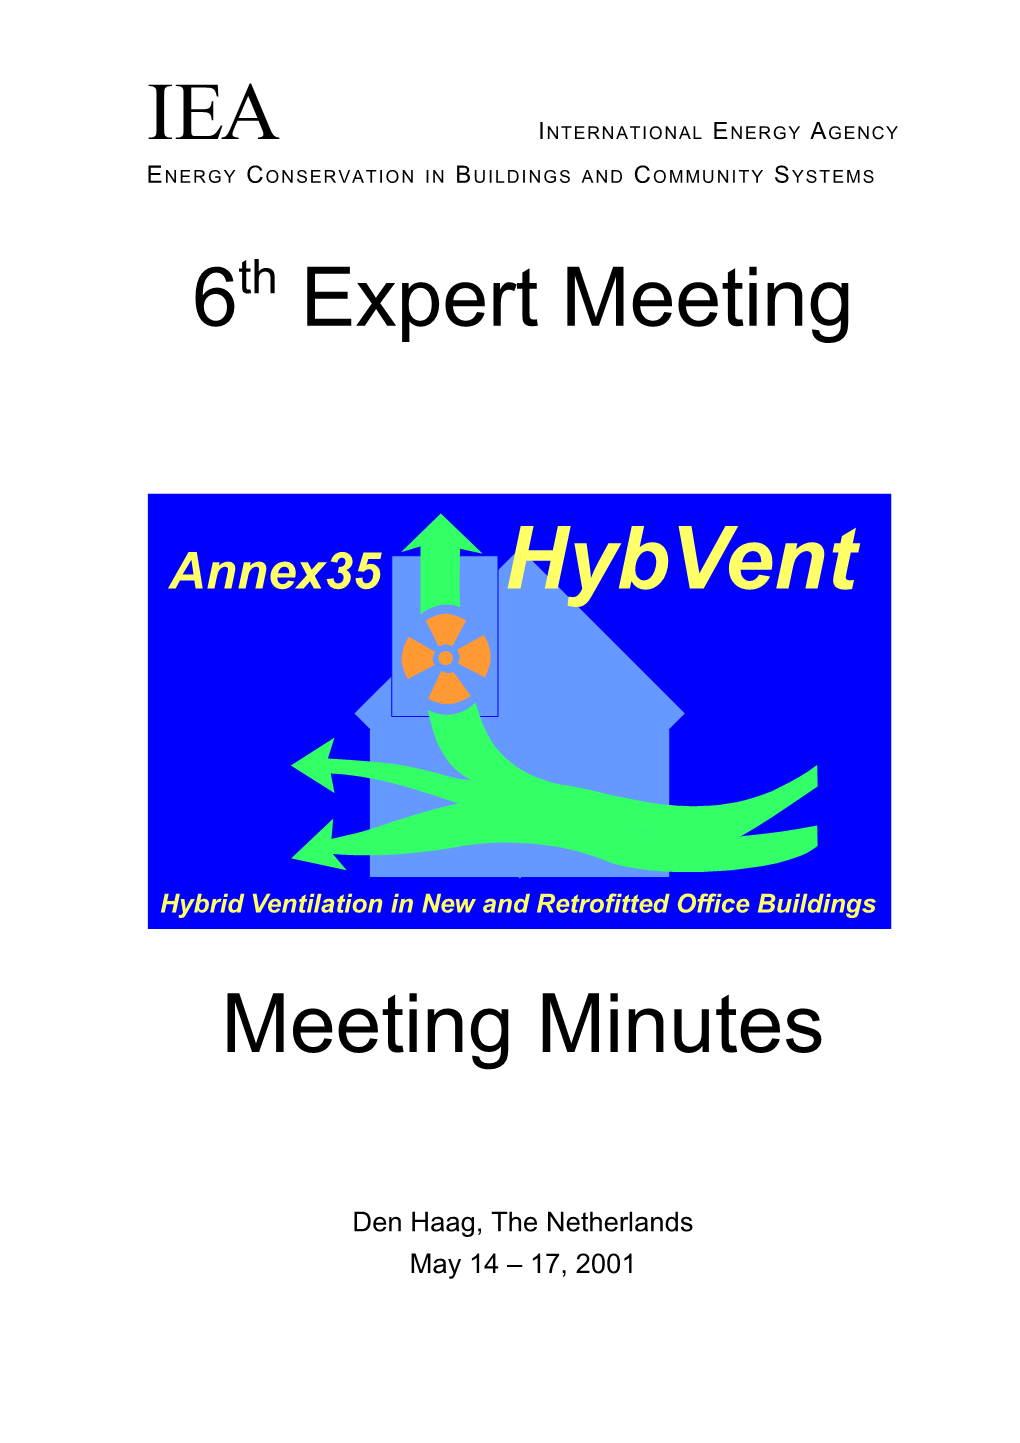 IEA-BCS Annex 35: Hybvent